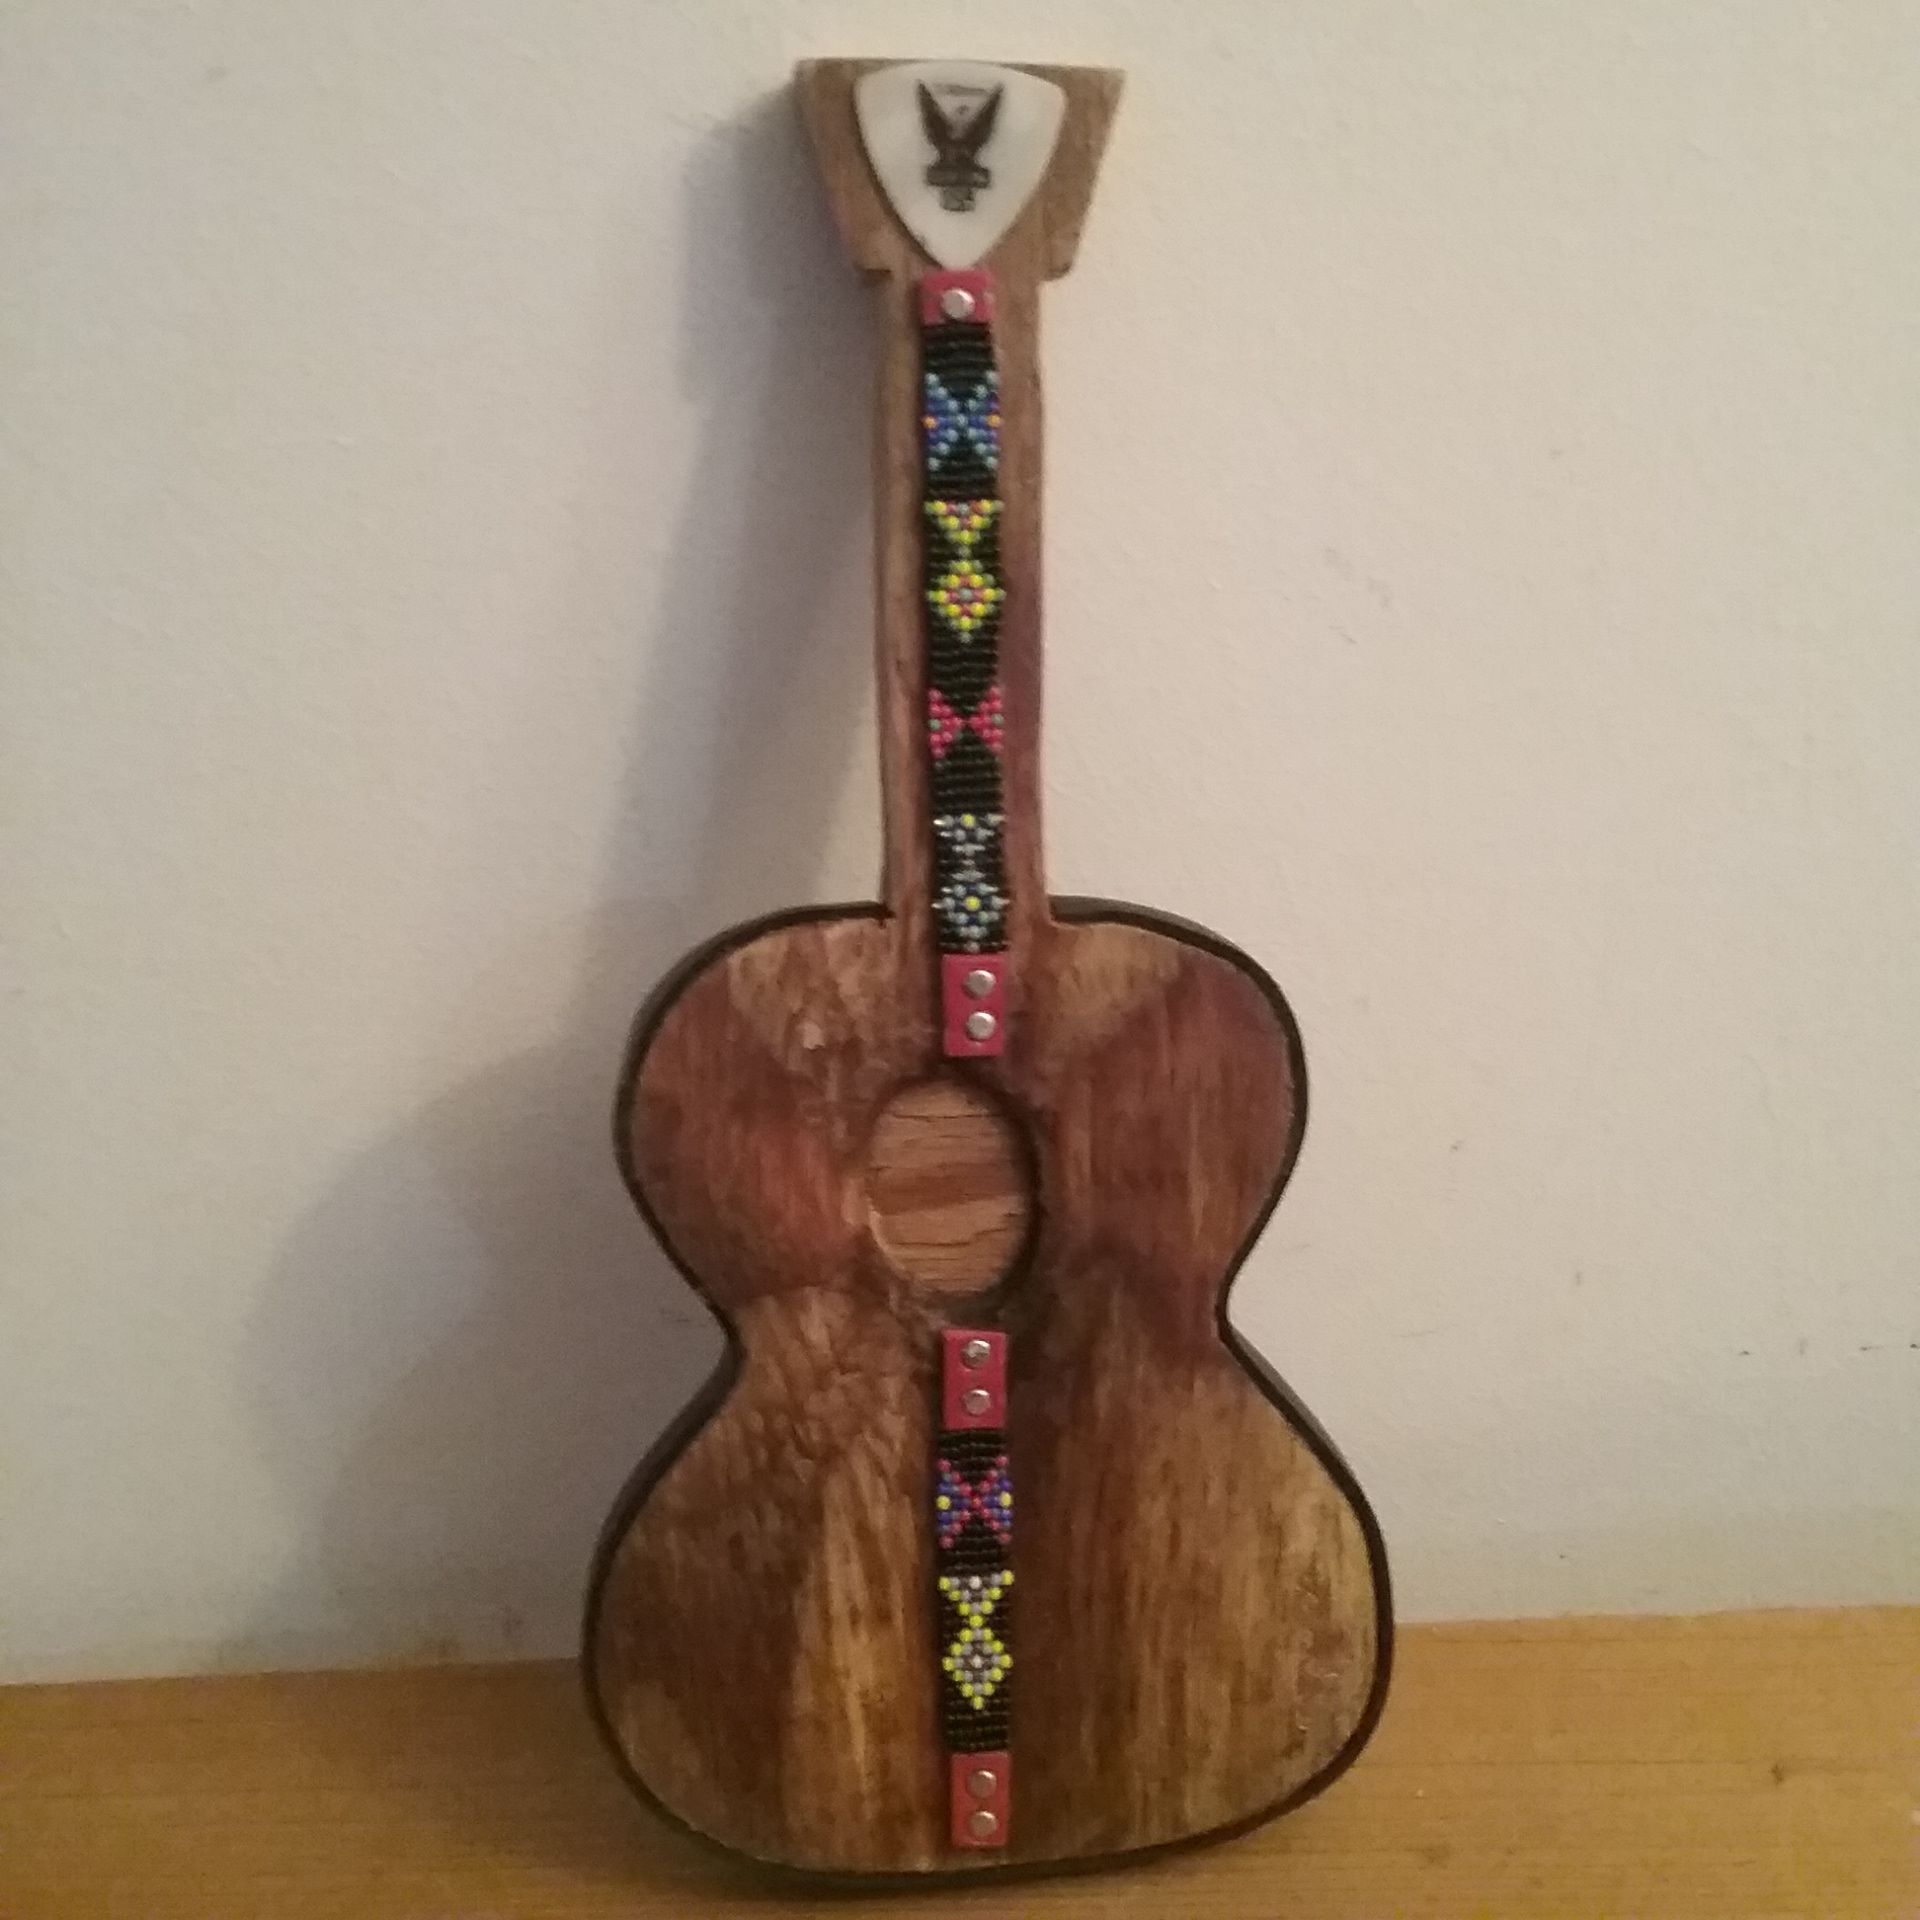 Handmade refurbished wood guitar 7" long